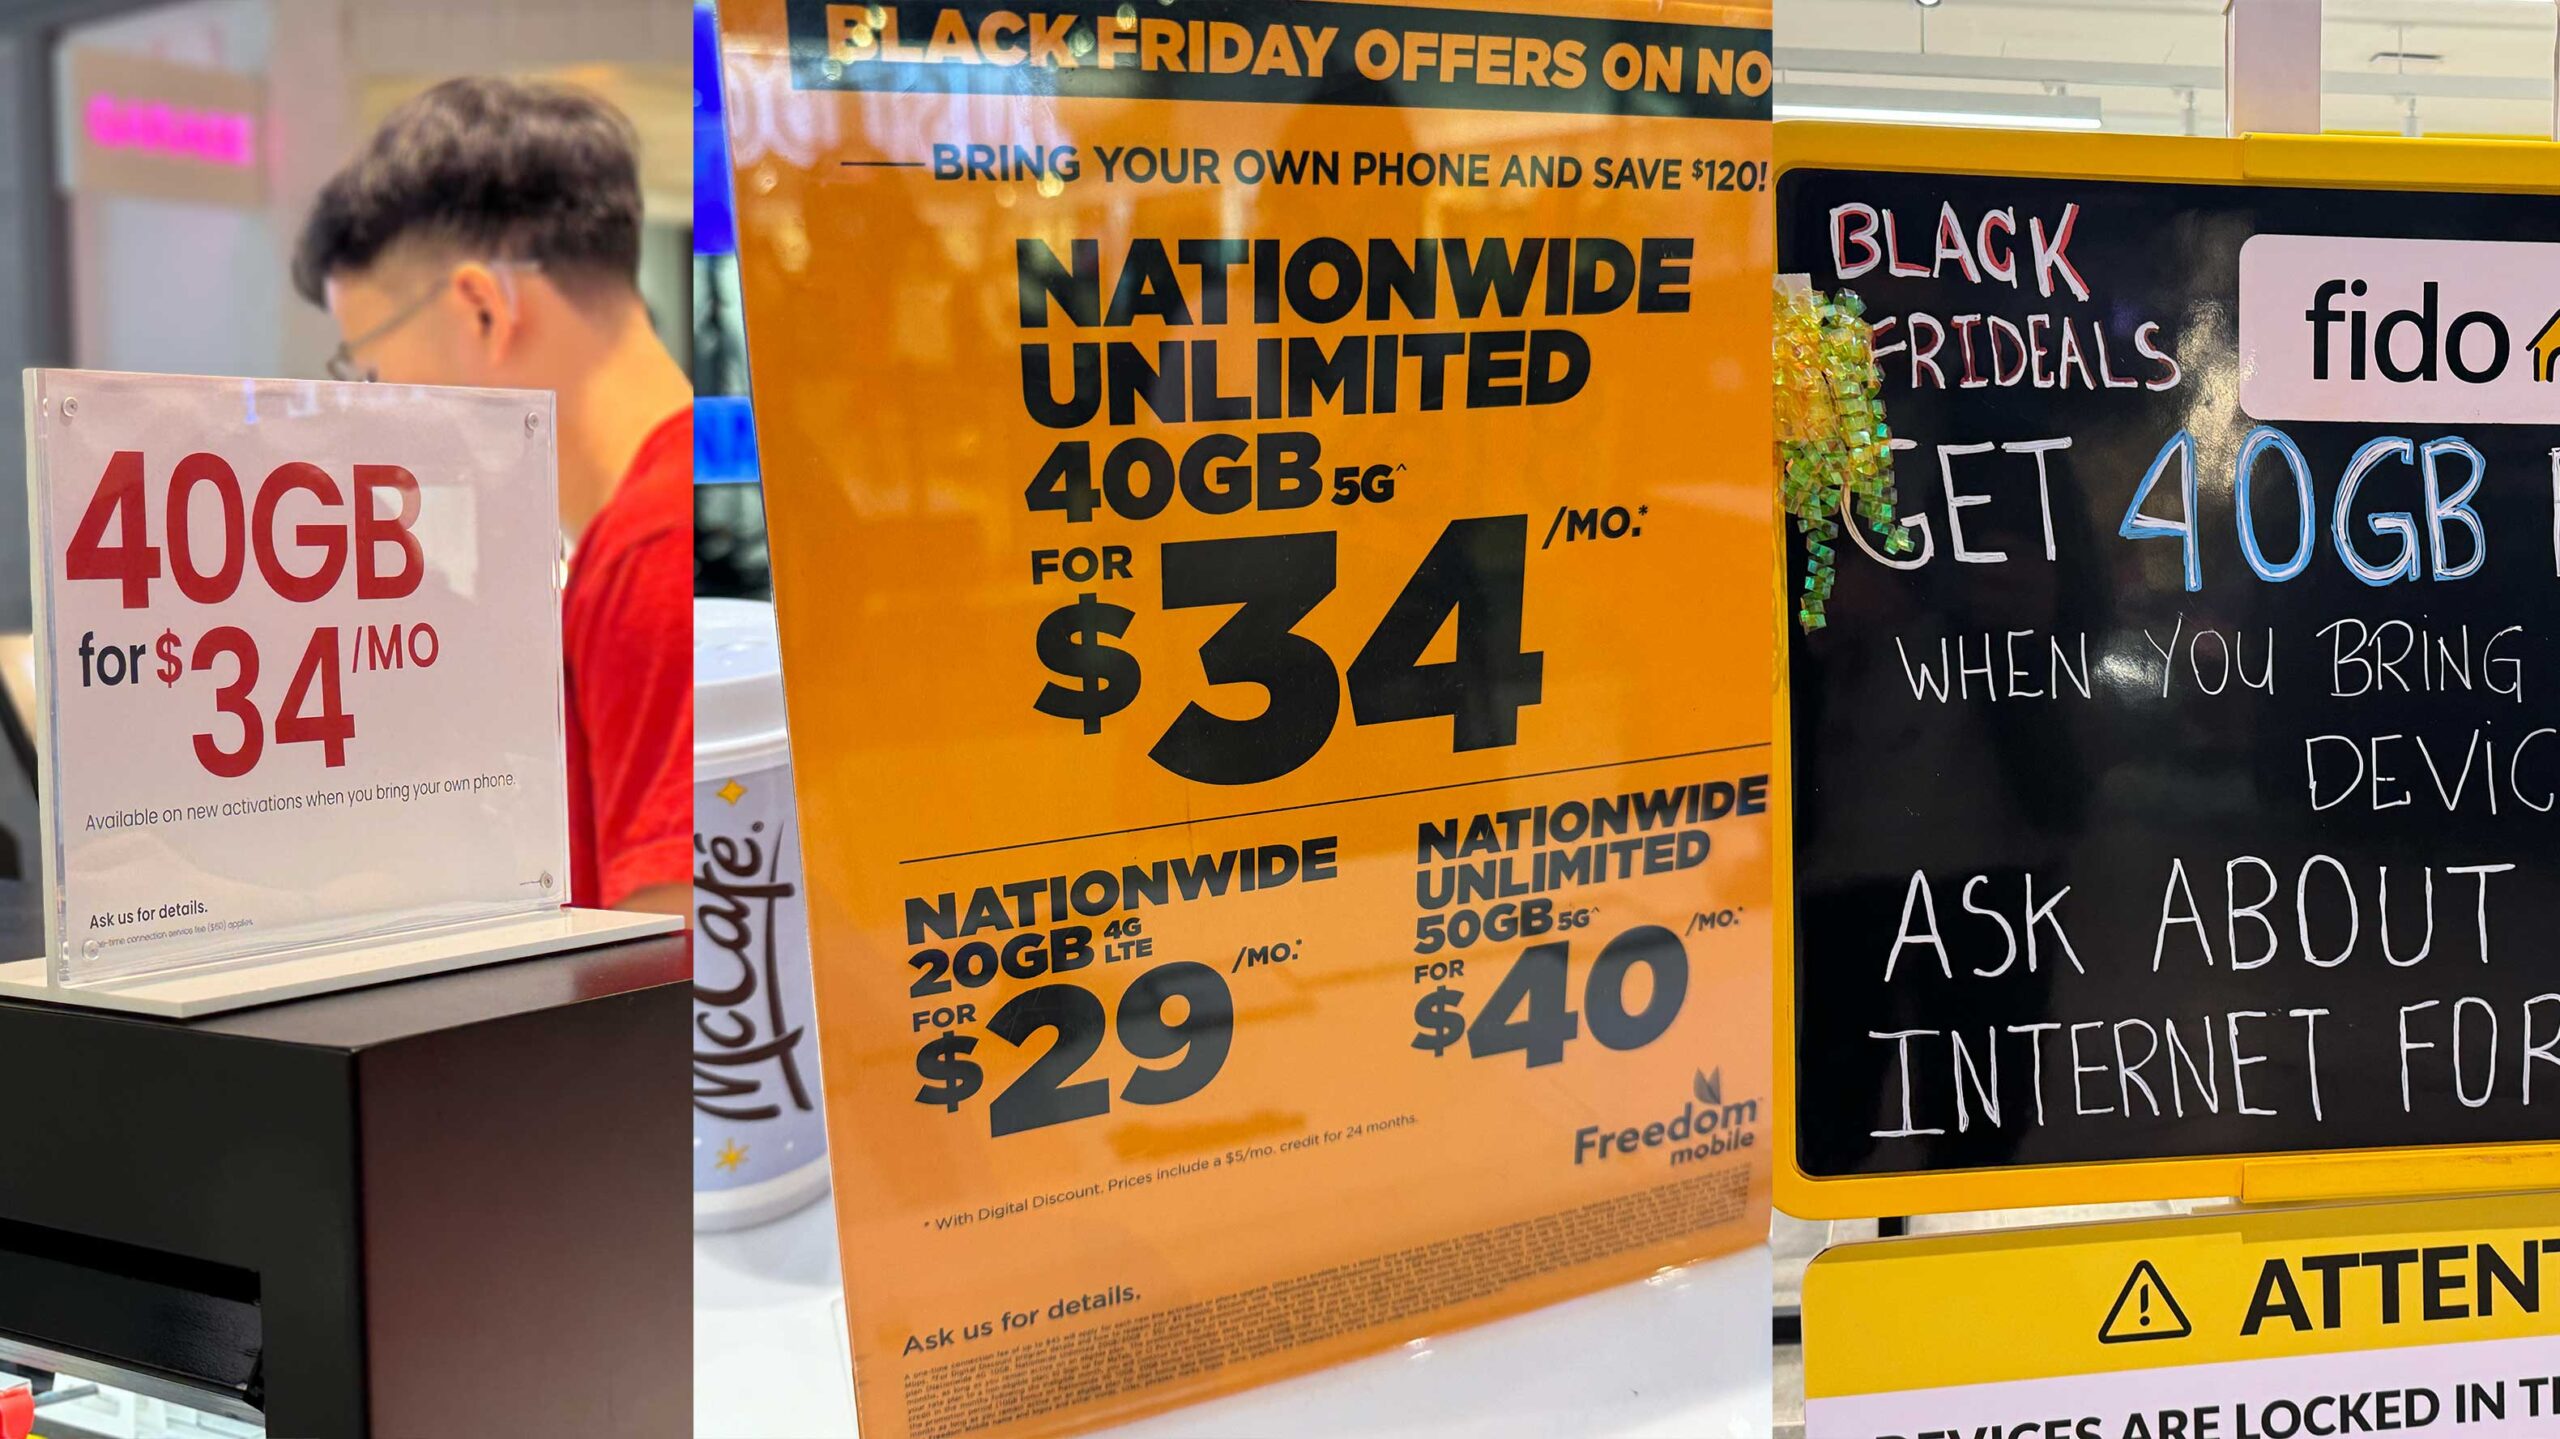 Good news: Black Friday carrier deals are just as good online as offline